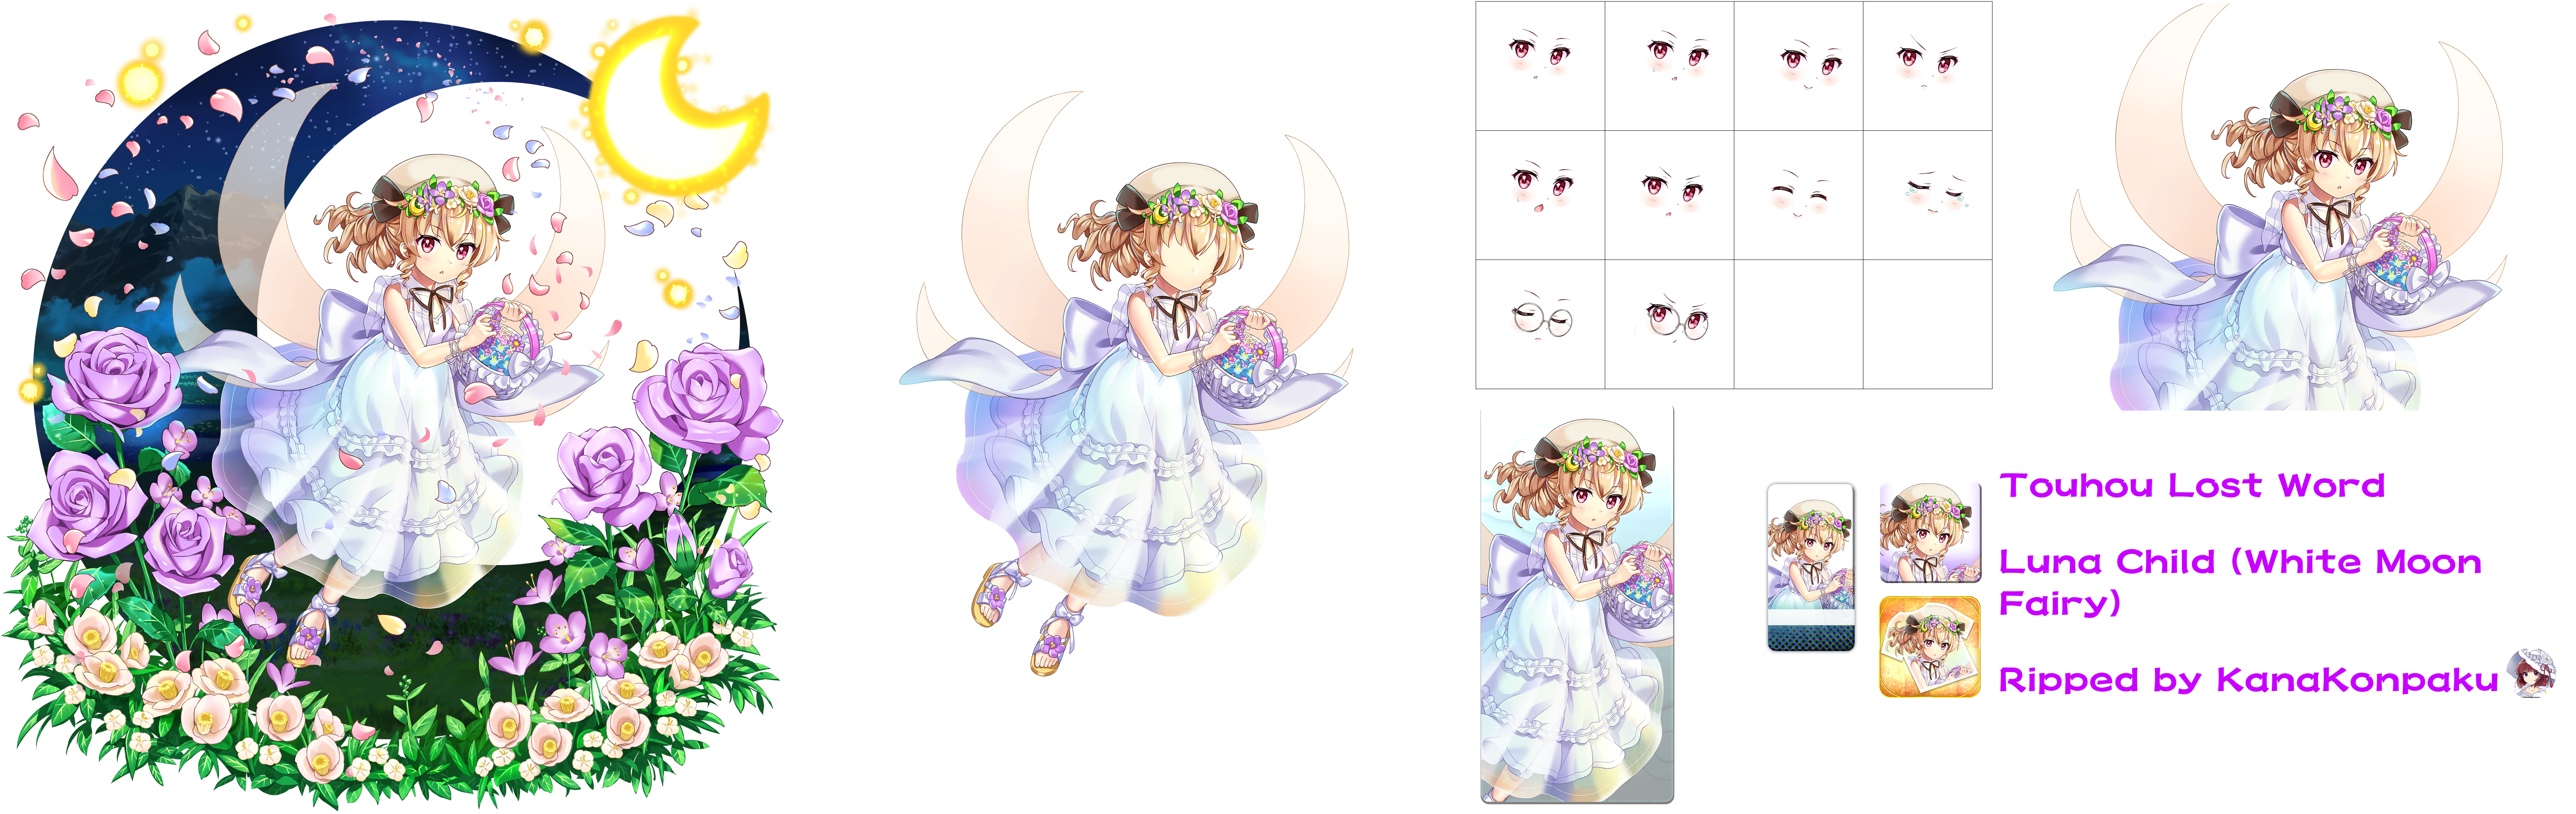 Luna Child (White Moon Fairy)